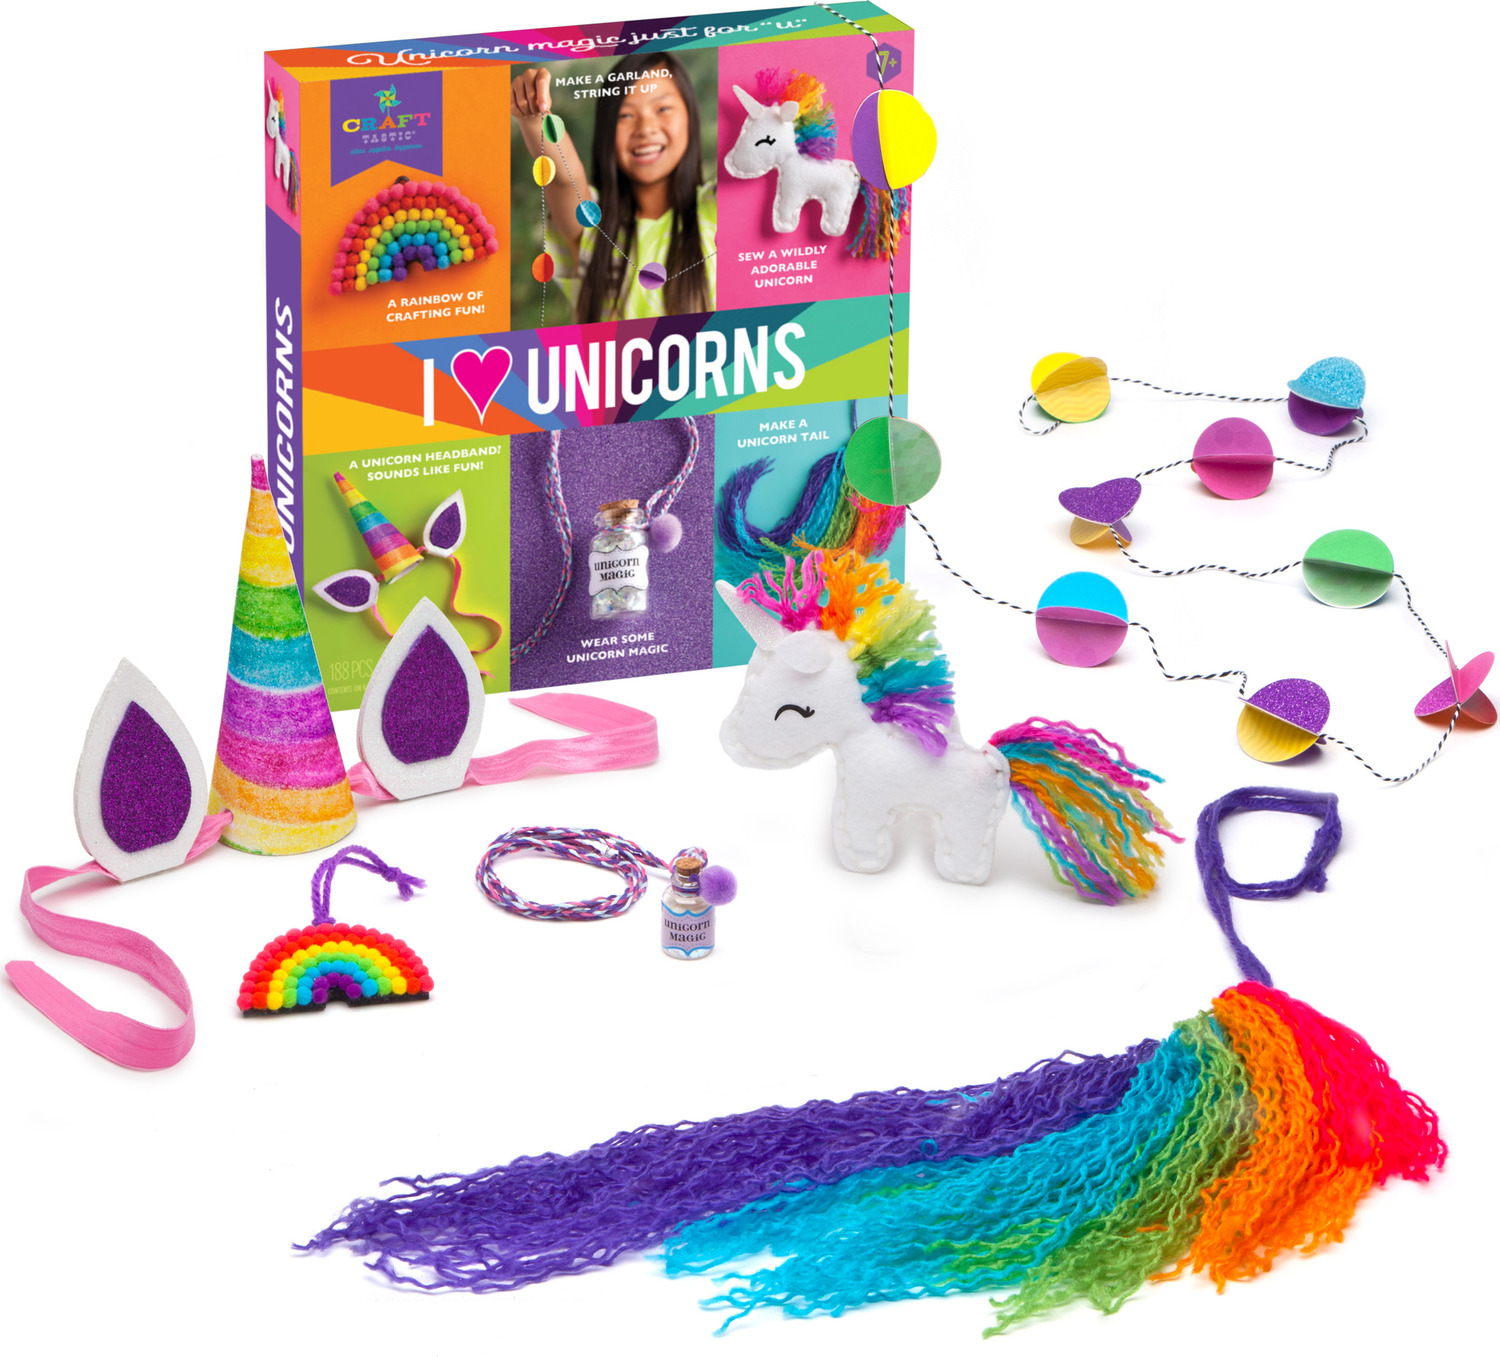 Craft Tastic Yarn Unicorns Kit